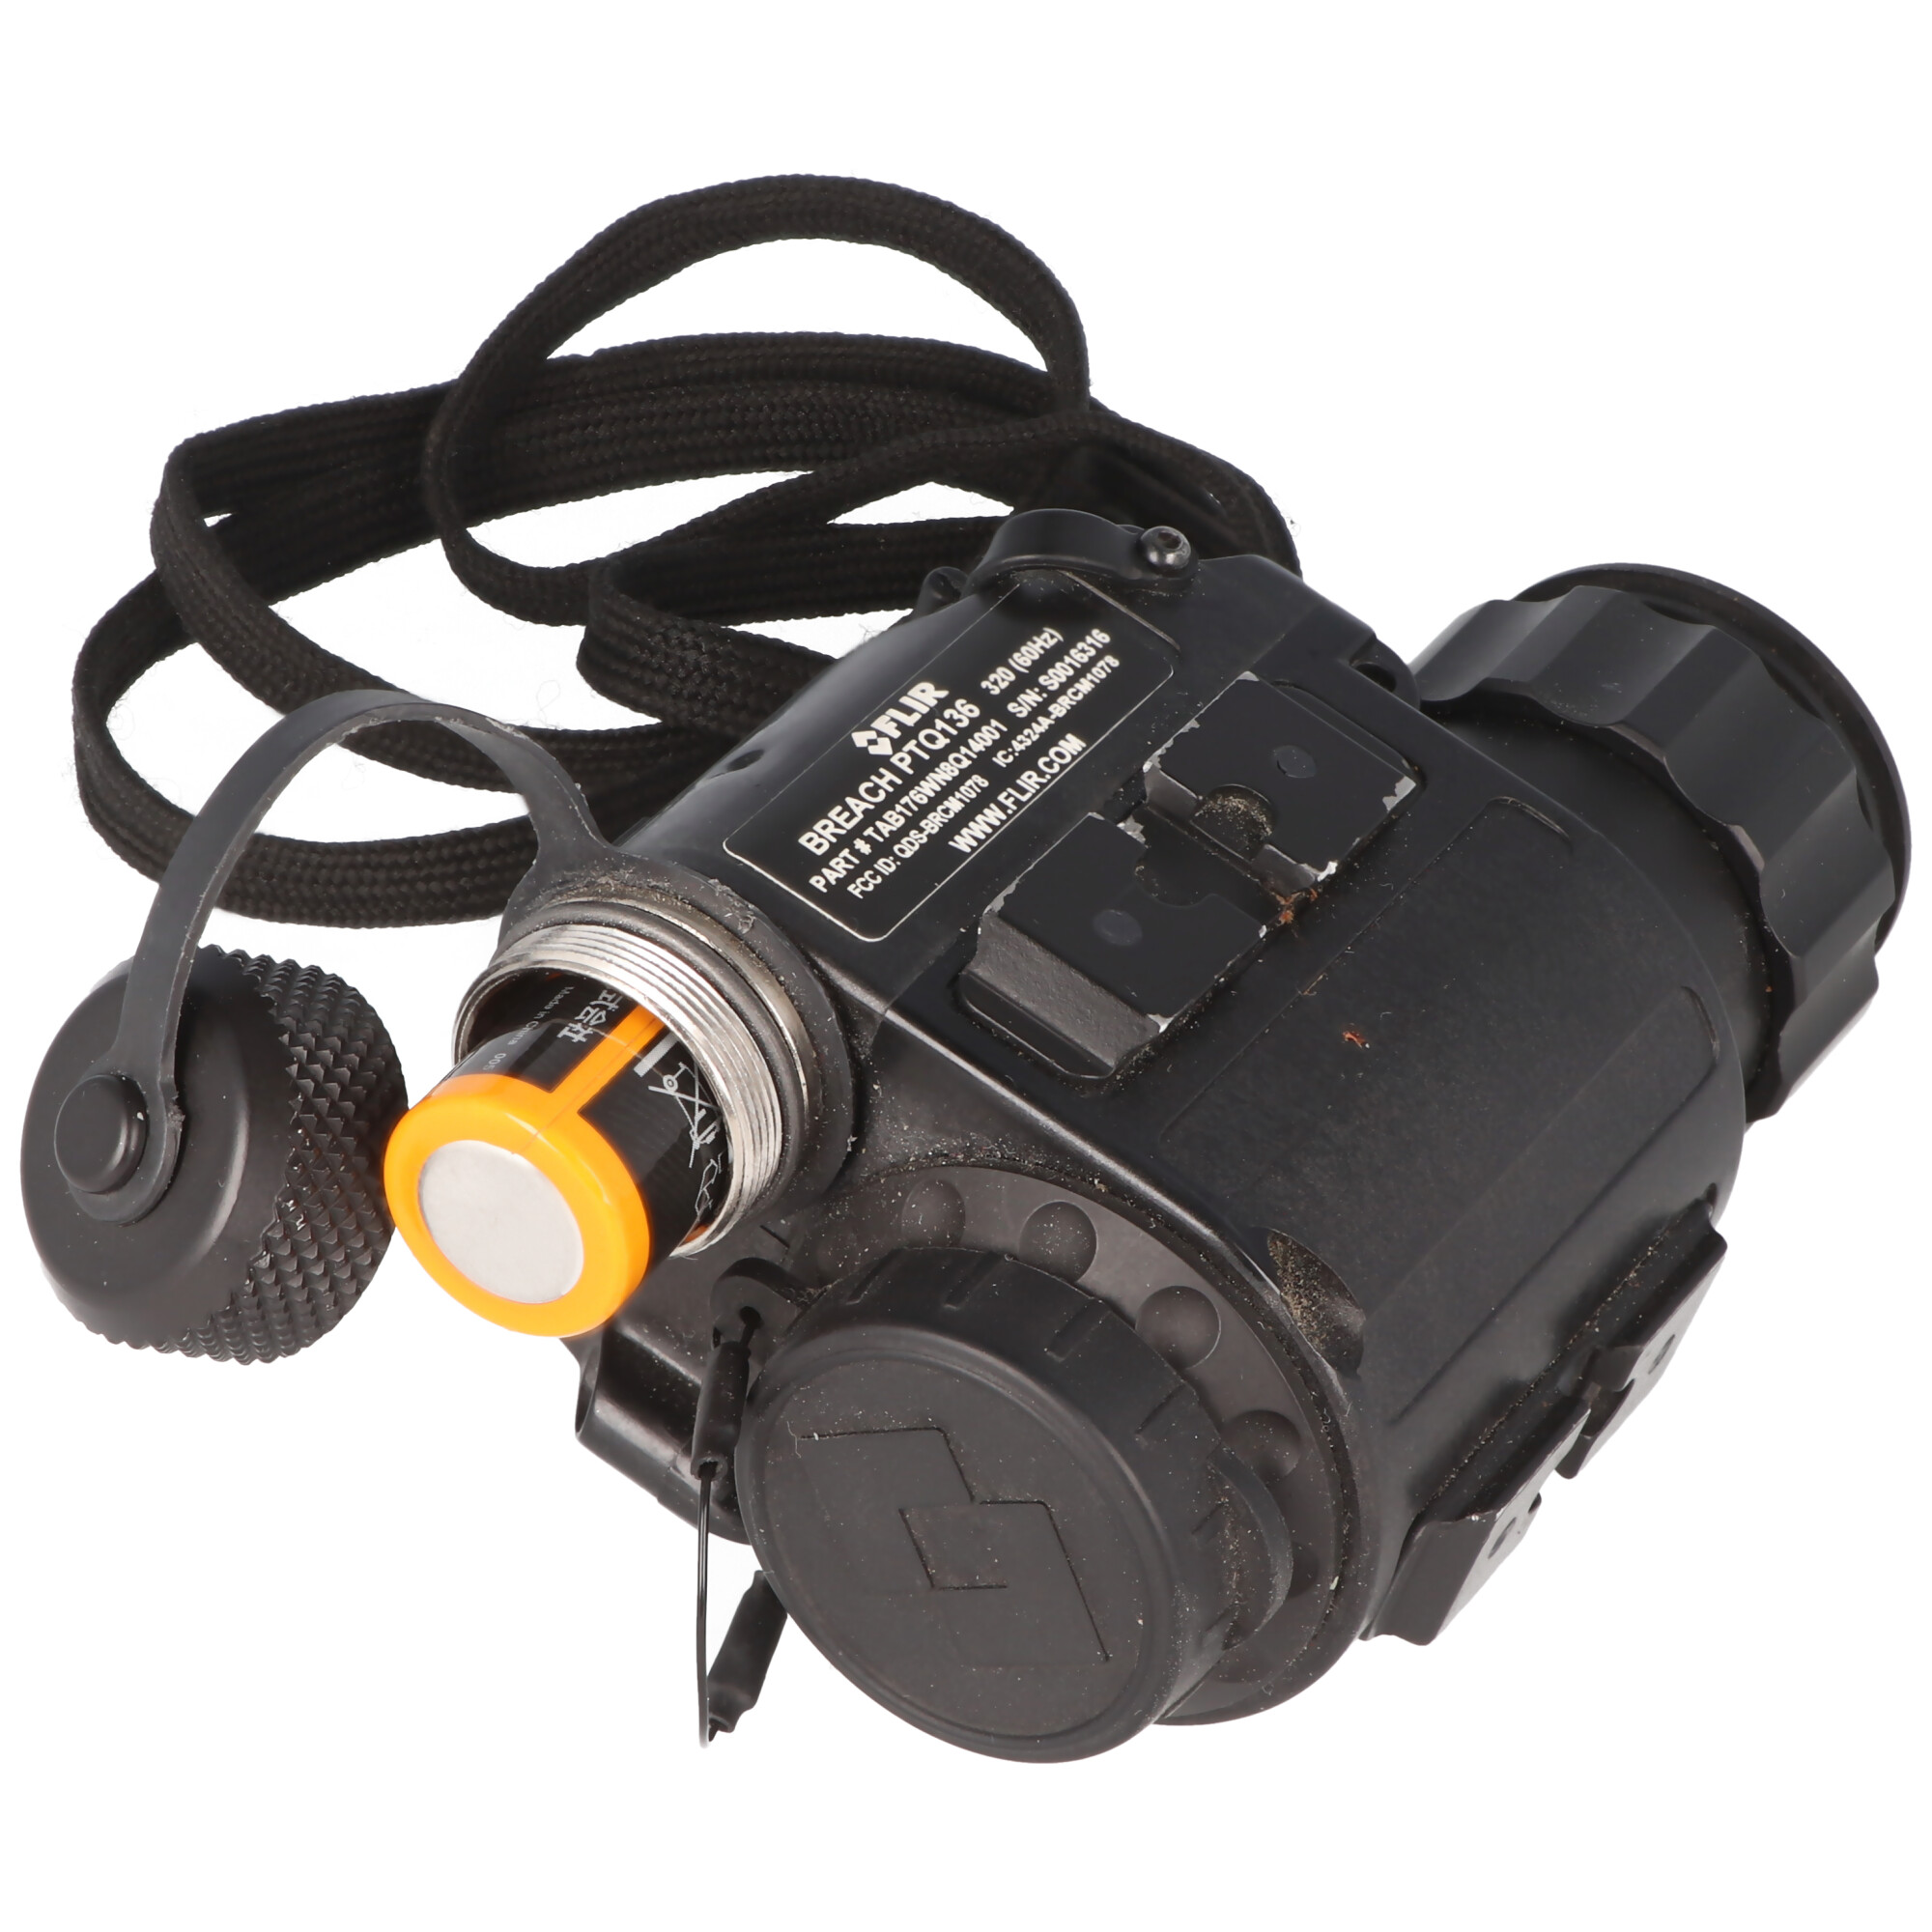 CR123A Akku passend für die FLIR Breach PTQ136 Wärmebildkamera Li-ion-Akku inklusive Ladegerät